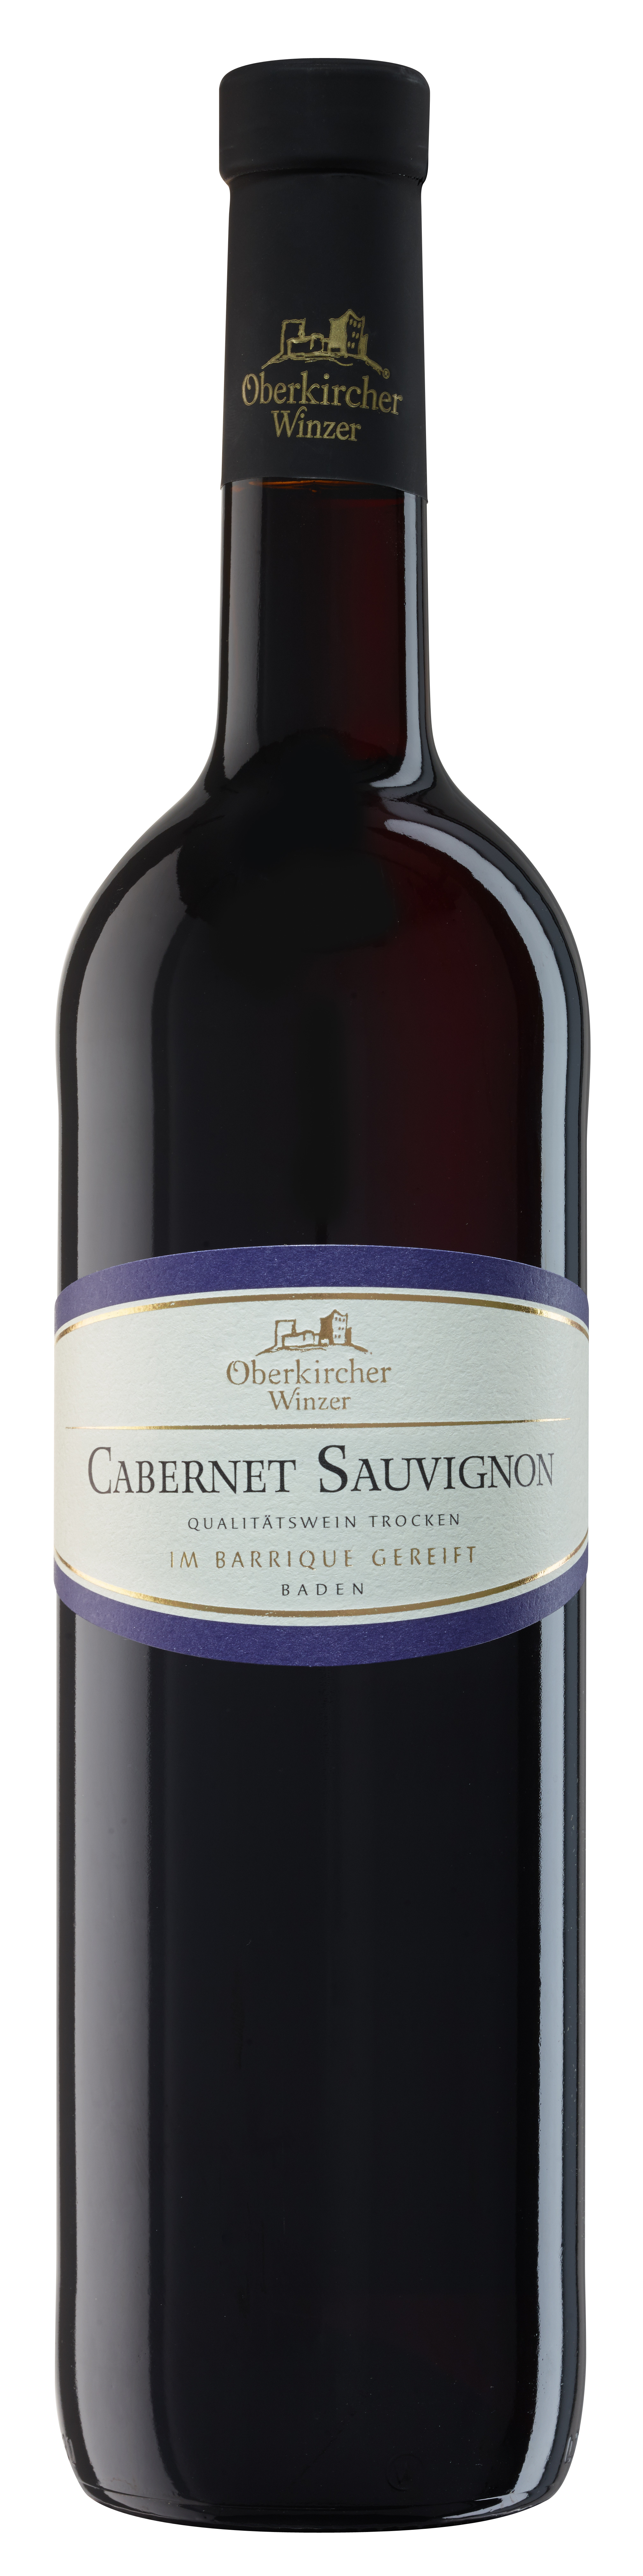 Vinum Nobile, Cabernet Sauvignon Qualitätswein trocken-Barrique-